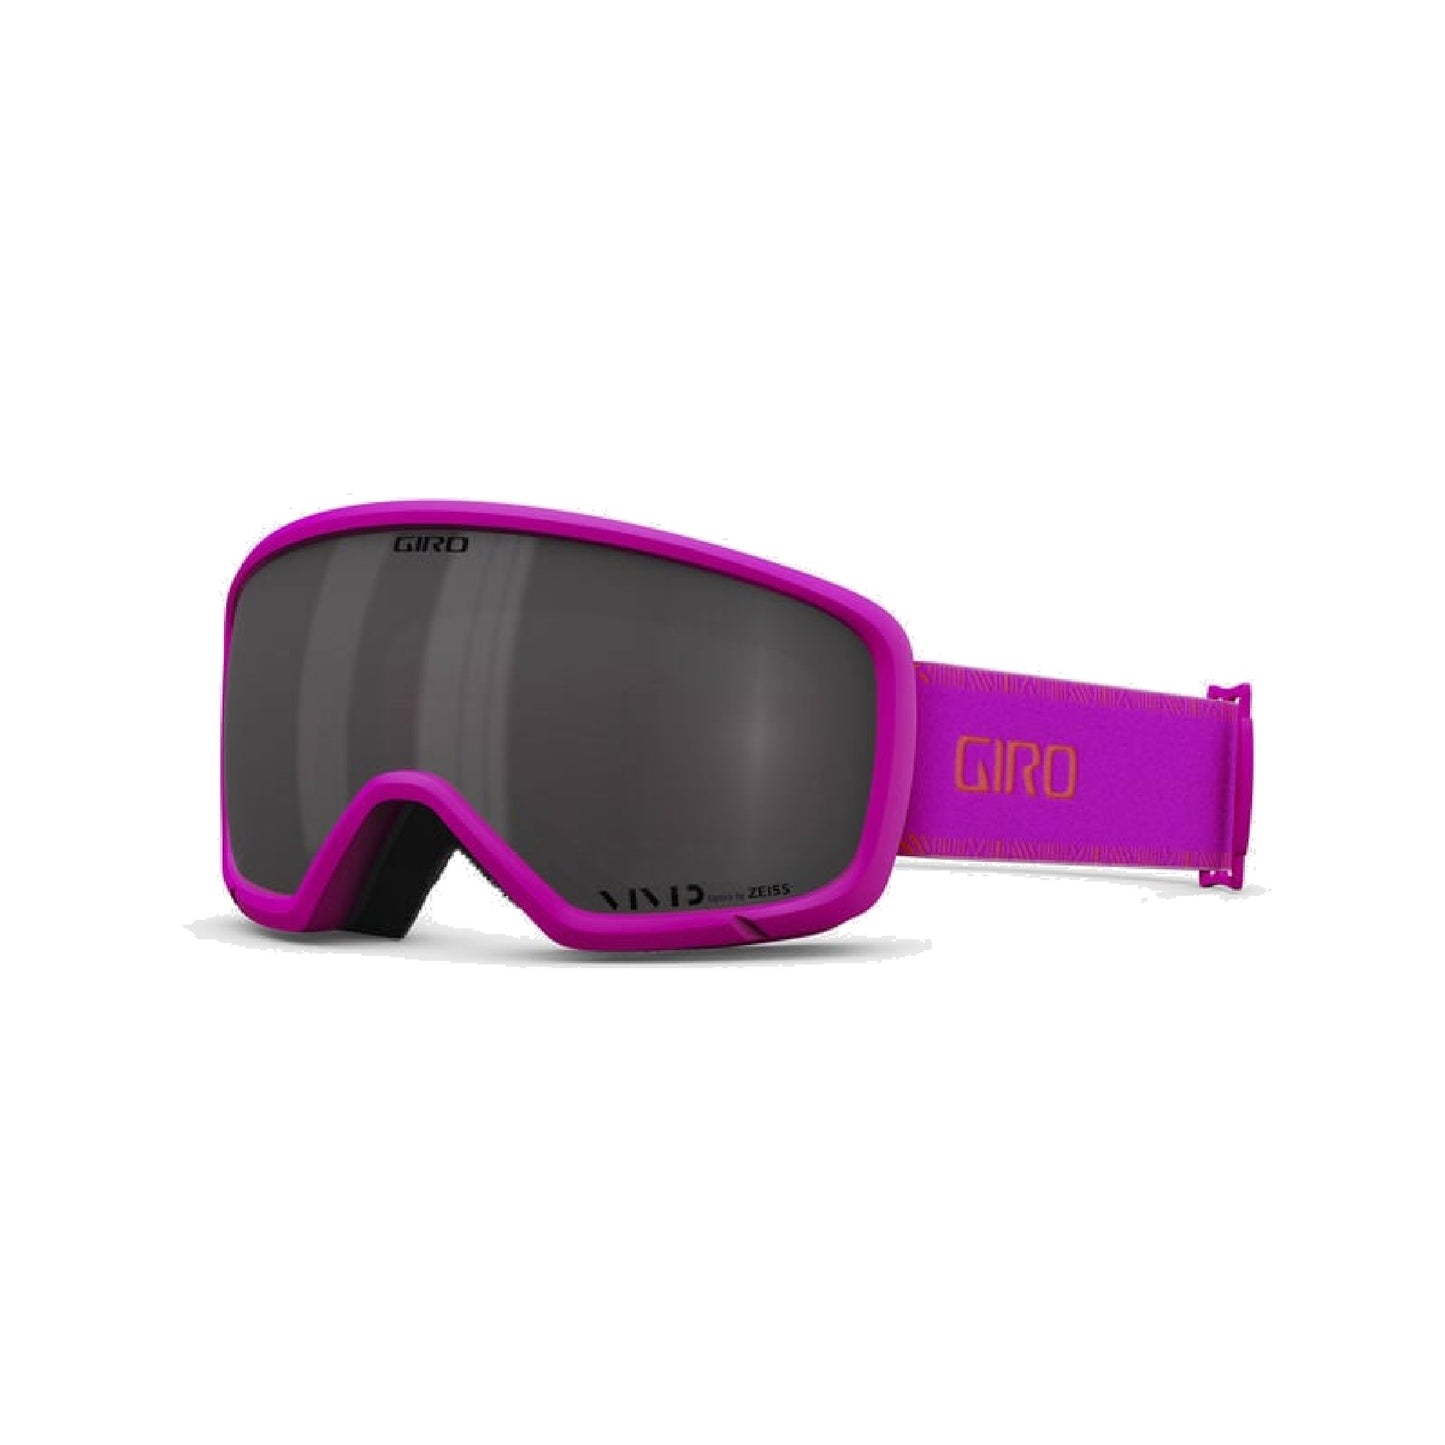 Giro Women's Millie Snow Goggles Pink Chute / Vivid Smoke Snow Goggles